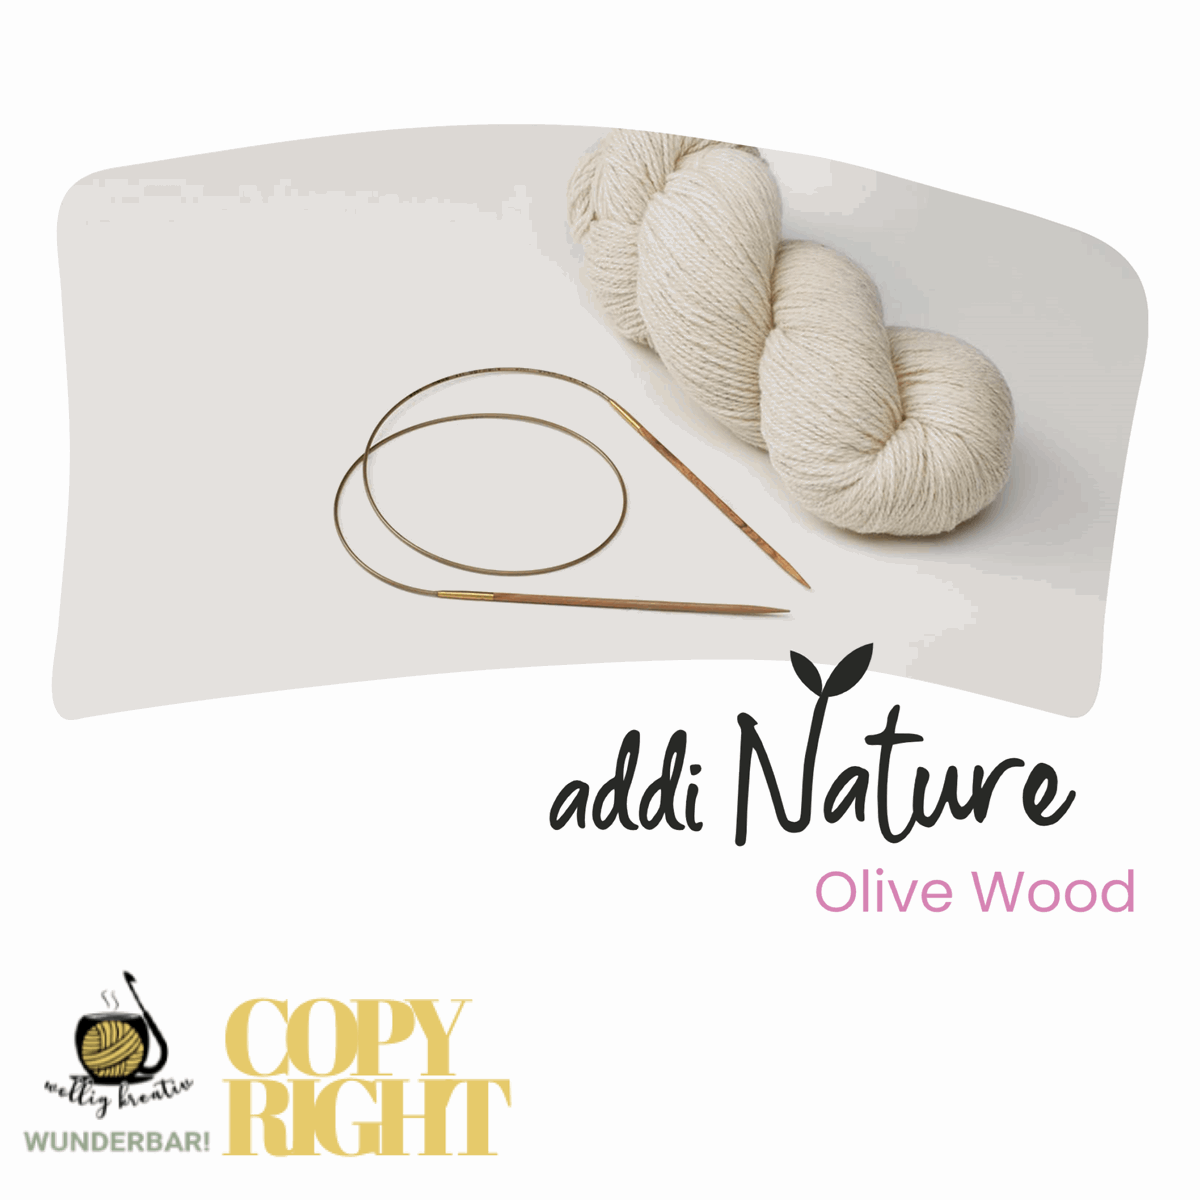 Addi, Nature Olive Wood Rundstricknadel, 65757, Größe 6, Länge 120